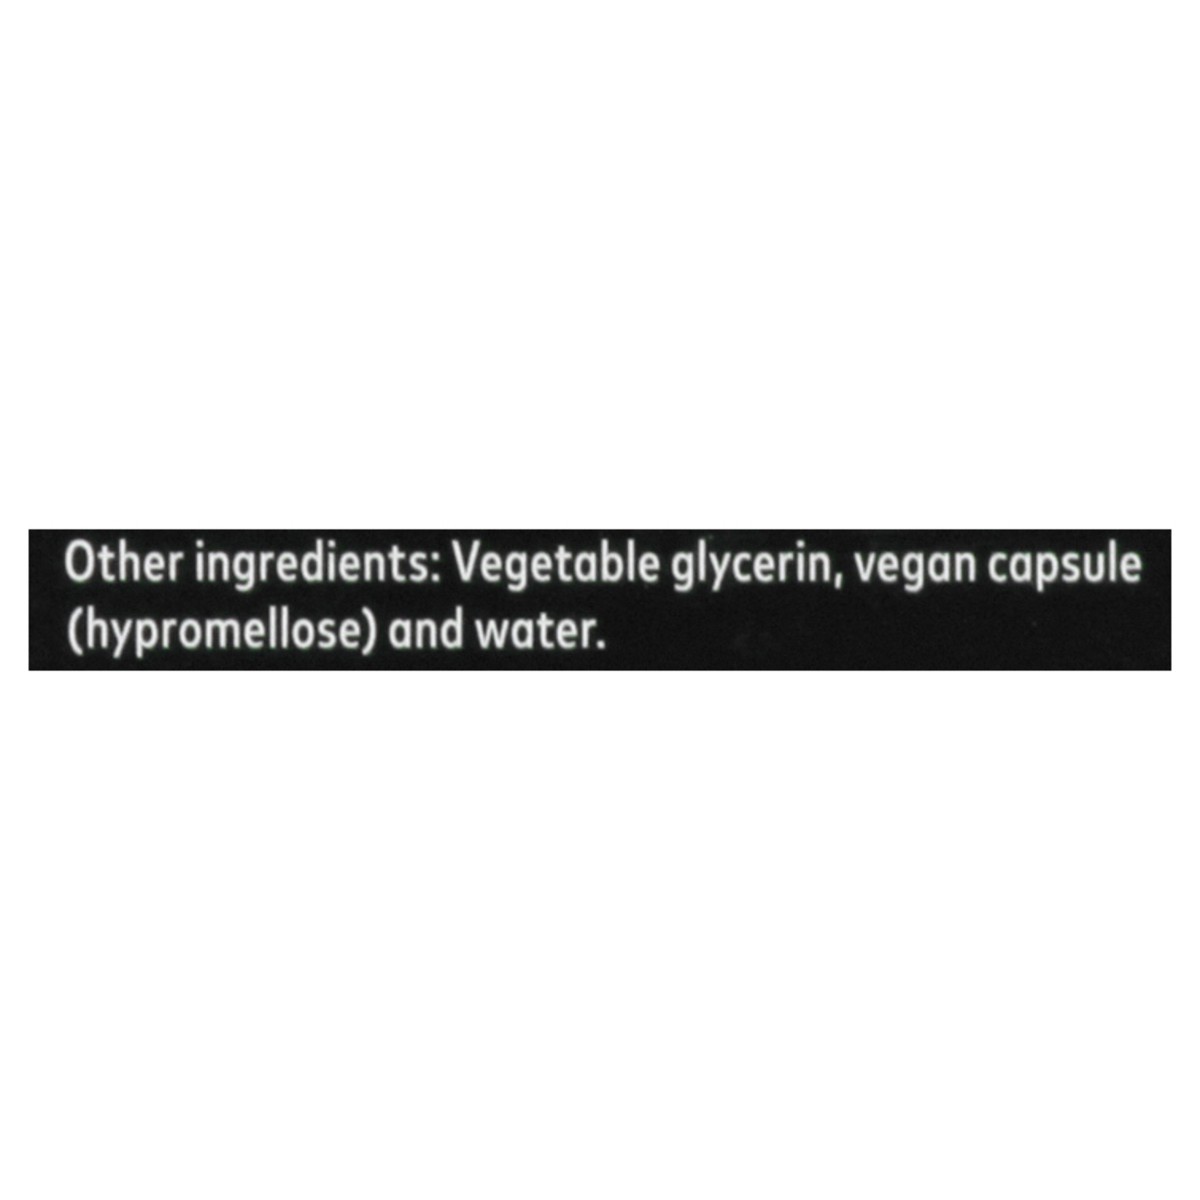 slide 8 of 13, Gaia Herbs Vegan Liquid Phyto-Caps Resveratrol 150 50 ea, 50 ct